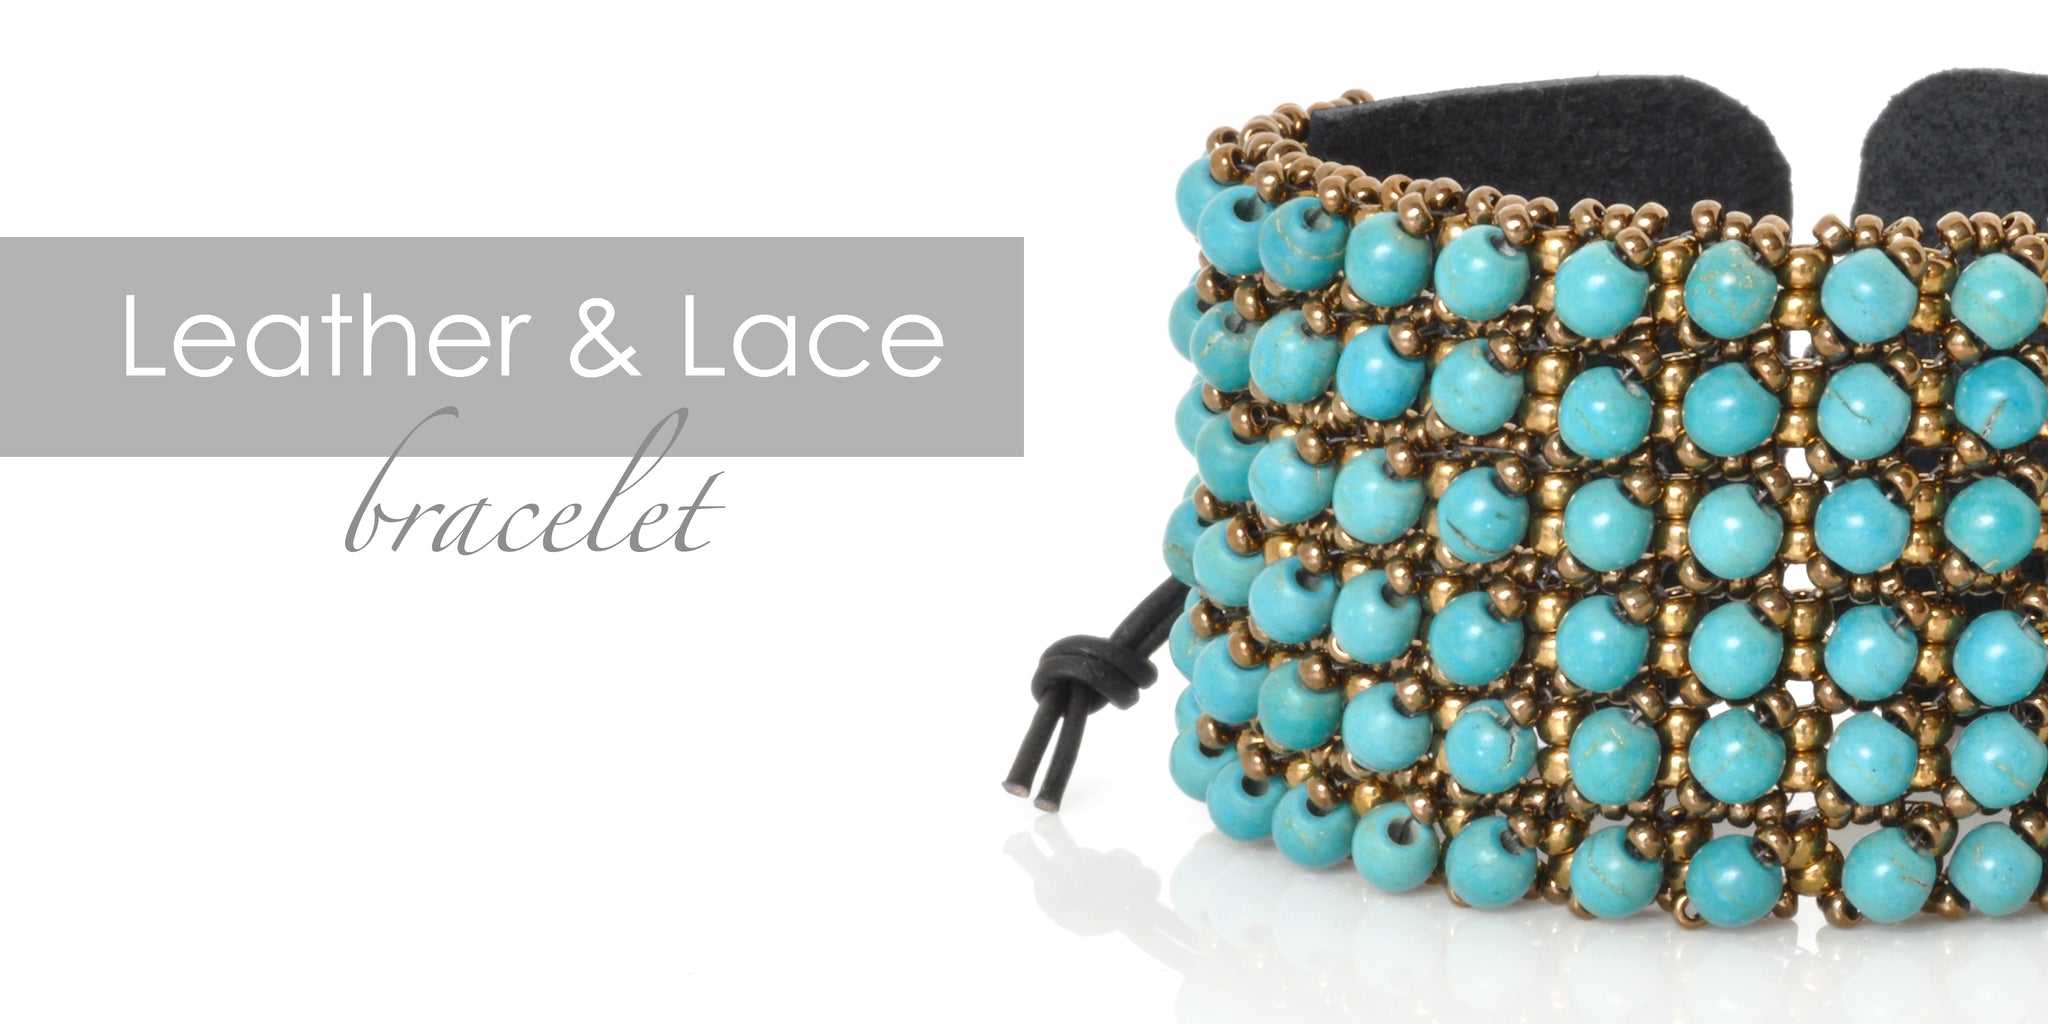 Leather & Lace Bracelet magdakaminska